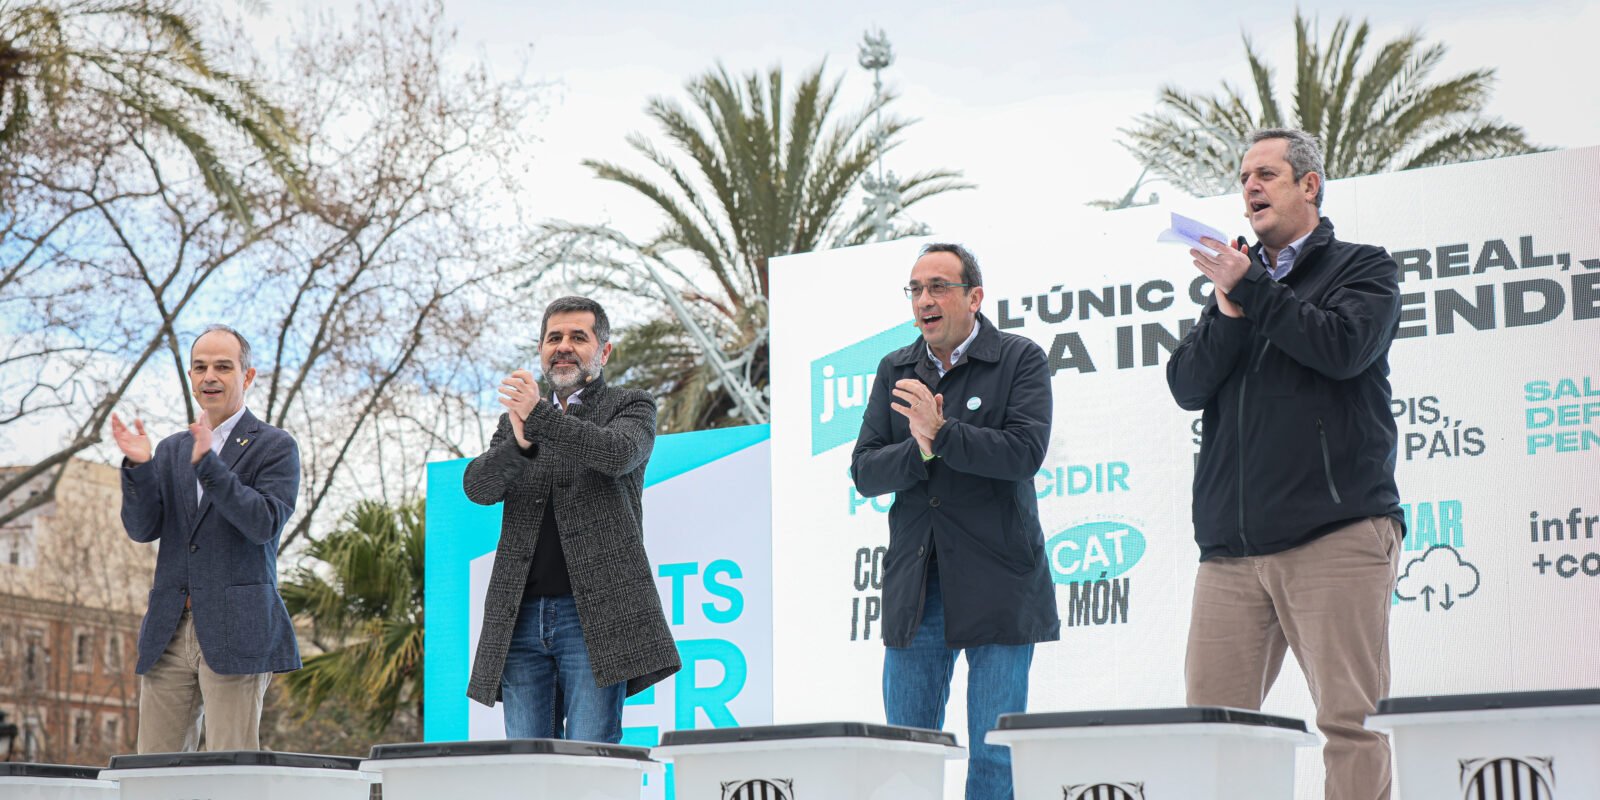 Jordi Turull, Josep Rull, Jordi Sánchez i Quim Forn - Junts